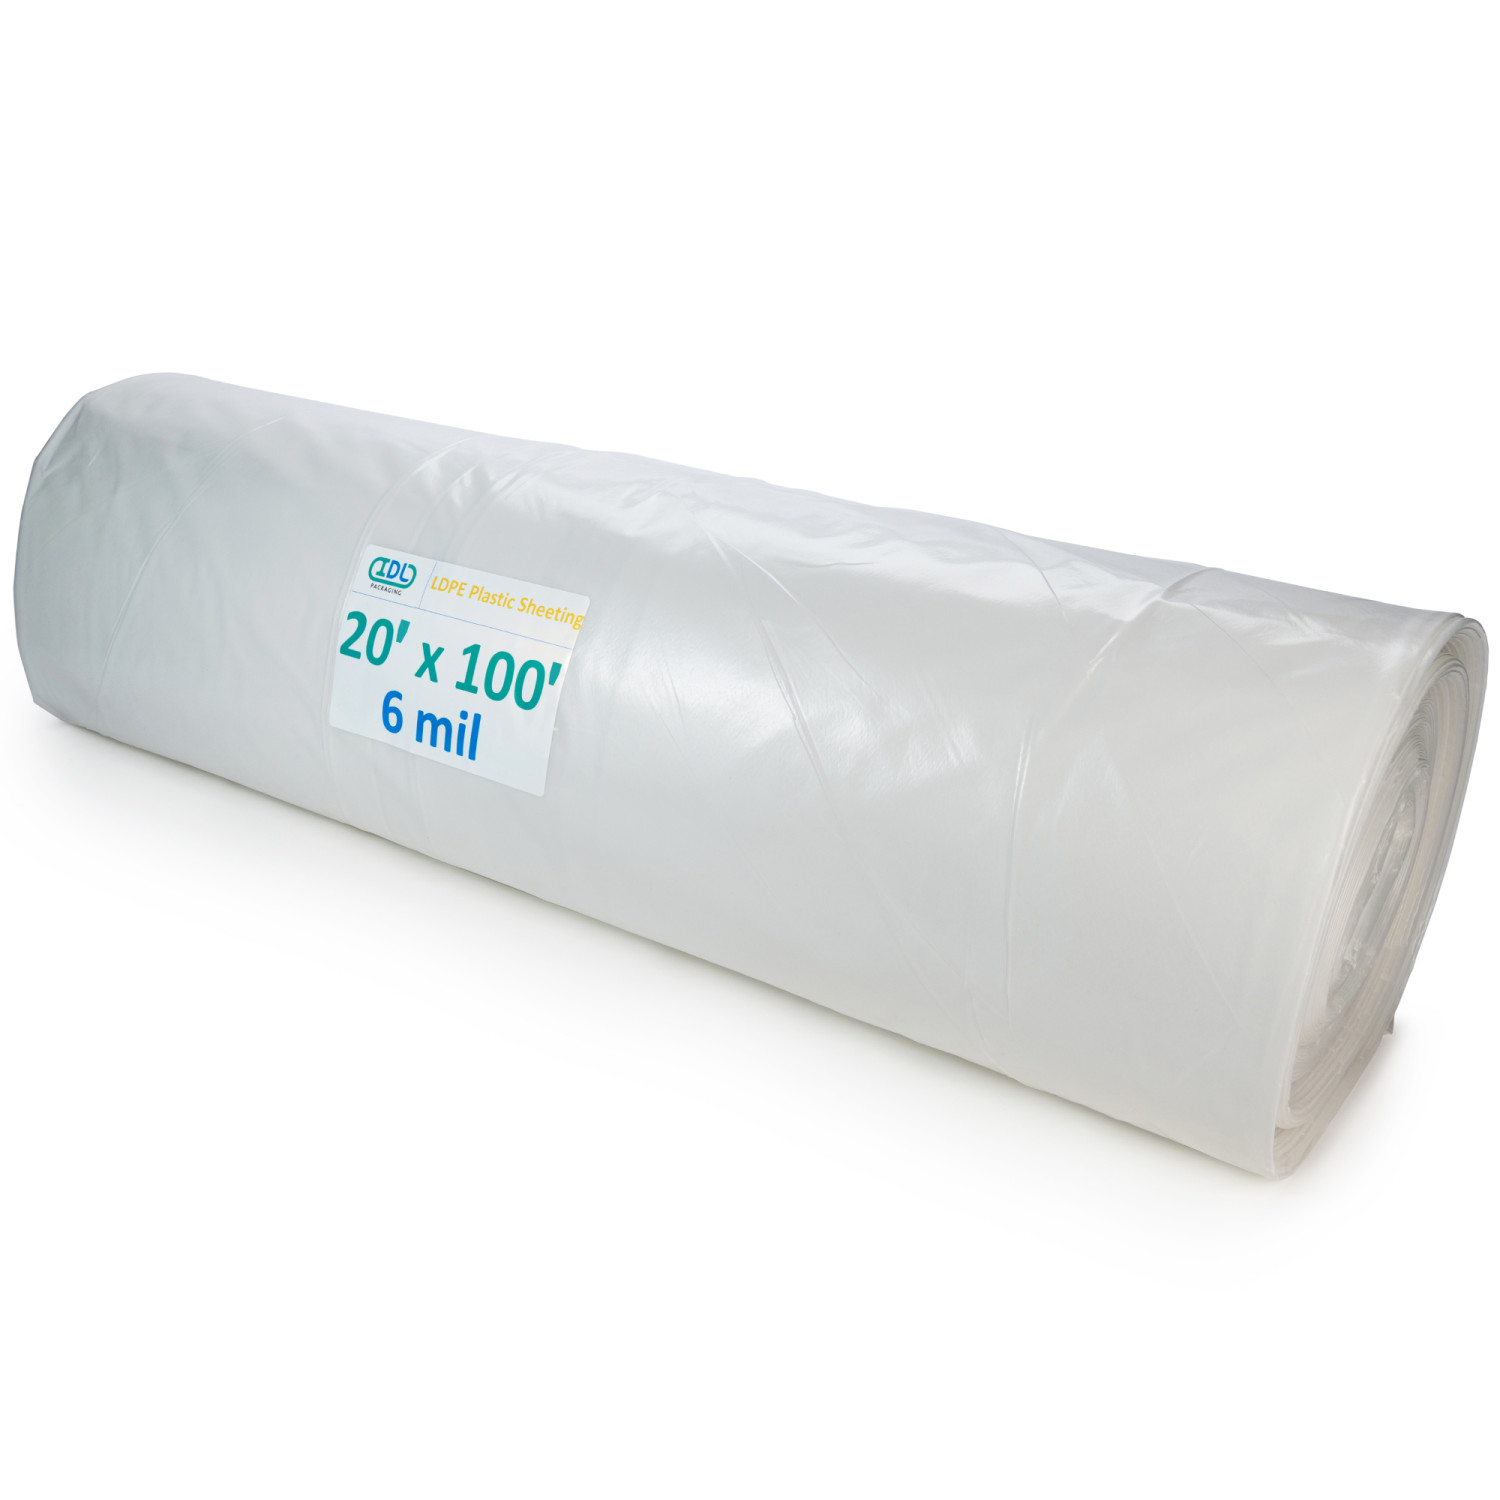 40 x 100 ft. x 6 mil Roll of Heavy Duty Clear Plastic Sheet